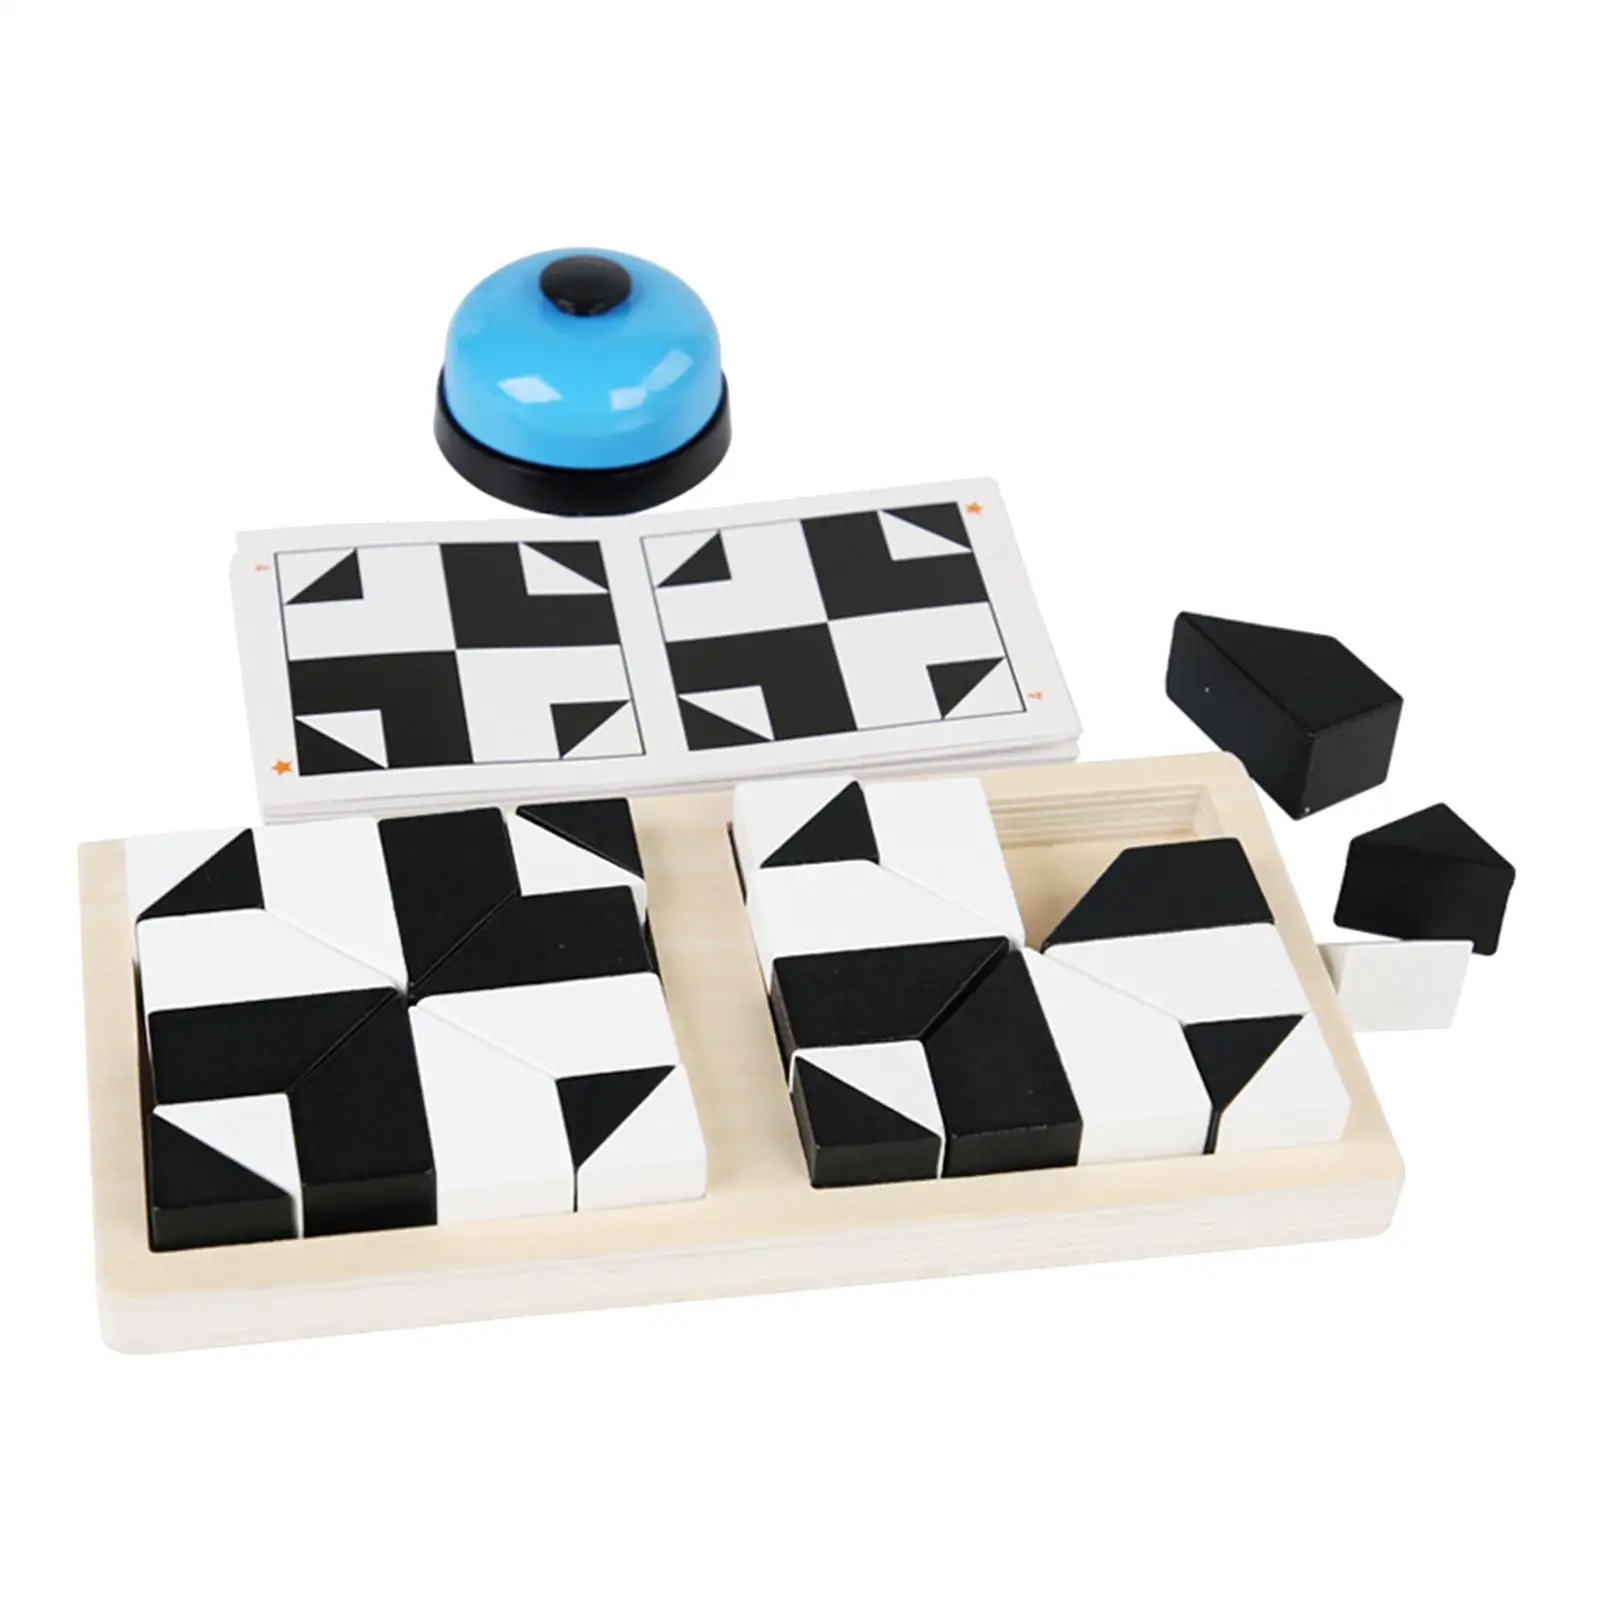 

Wooden Blocks Puzzle Preschool Stem Birthday Gifts 3D Jigsaw Geometric Brain Teaser for Girls Children Ages 4-8 Kids Preschool